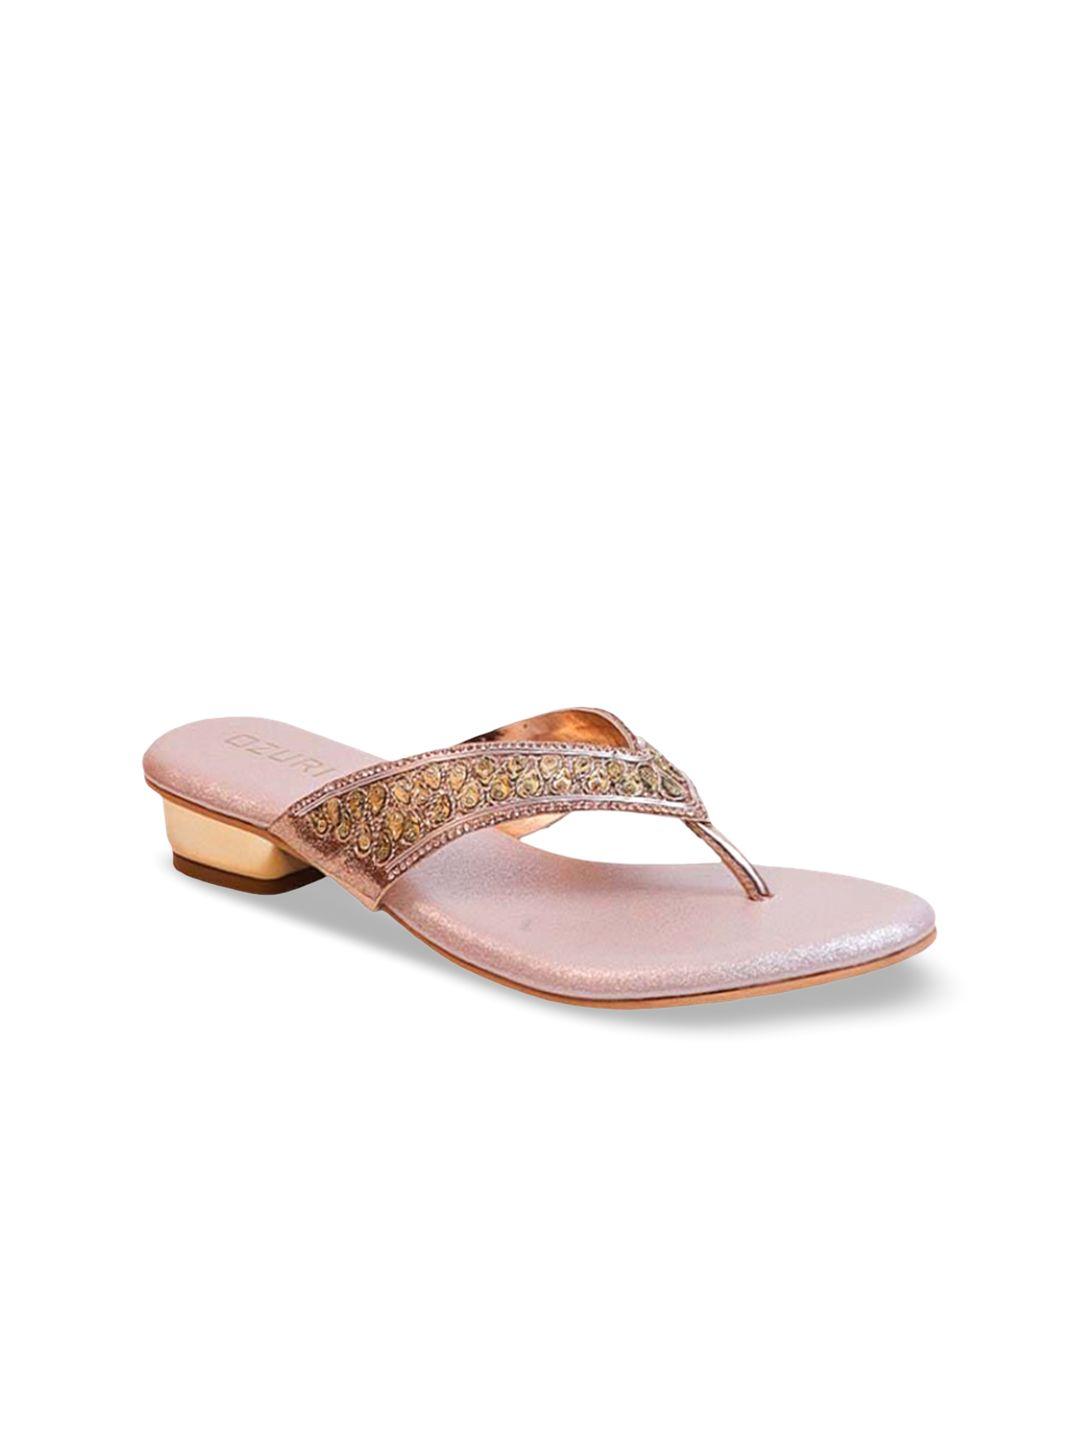 ozuri embellished open toe block heels